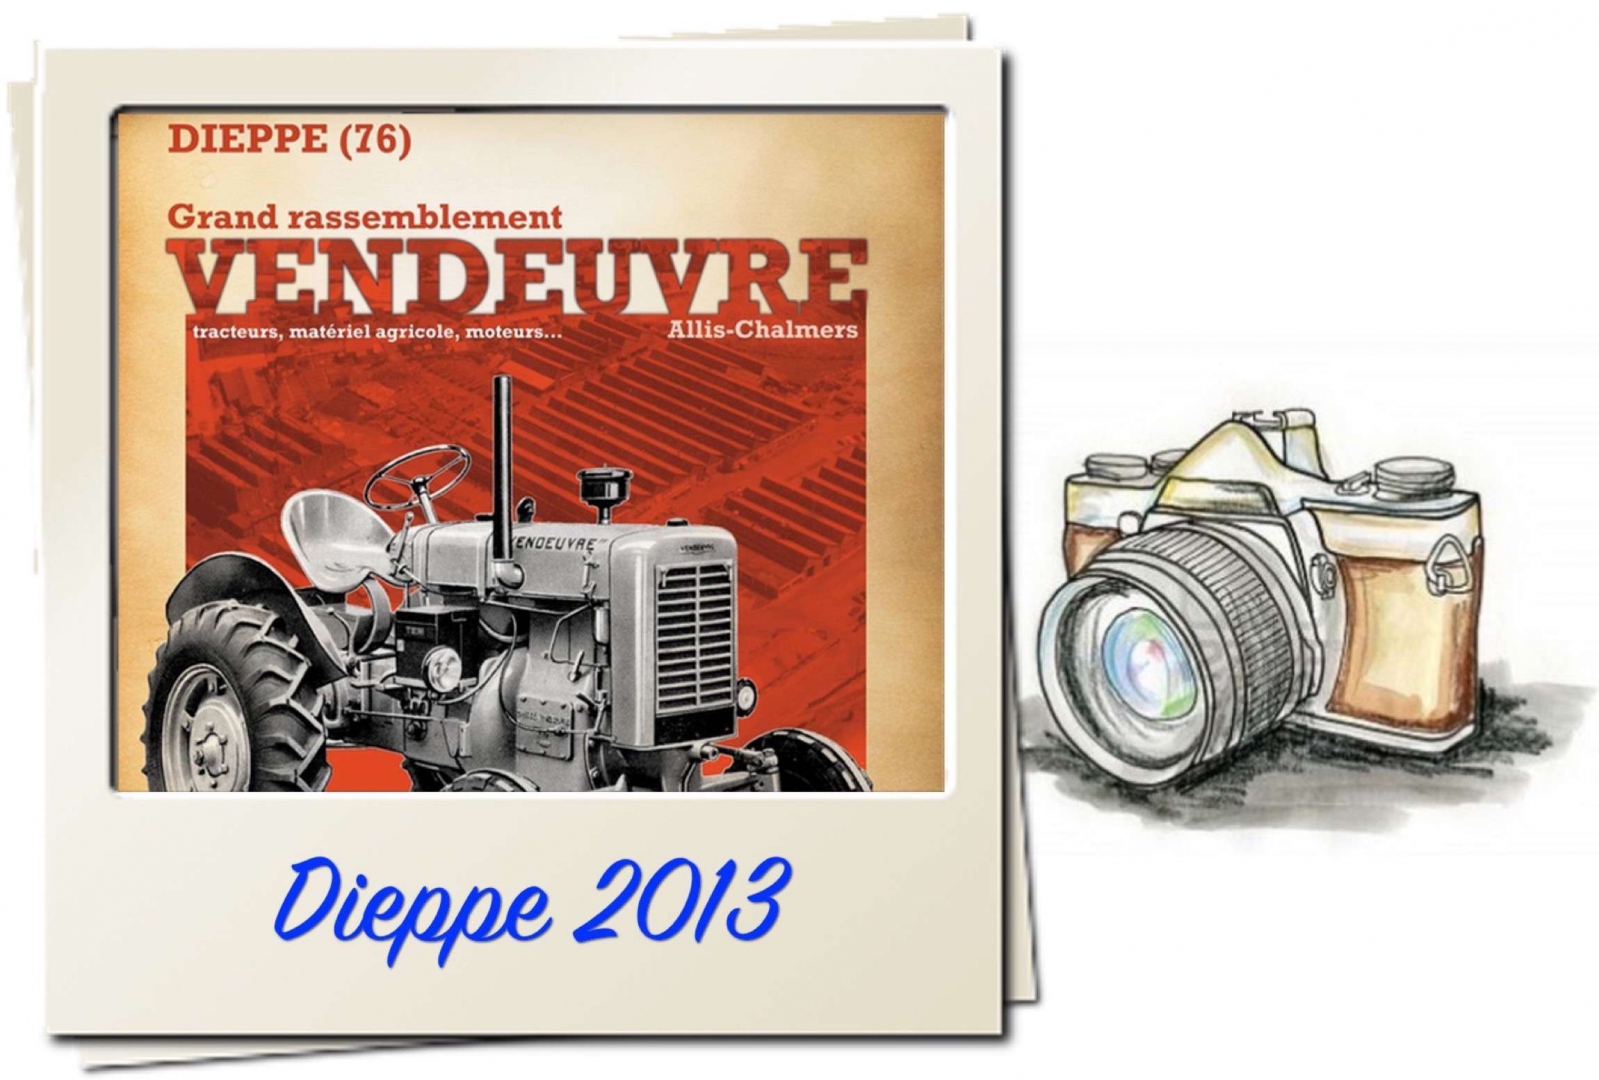 Dieppe 2013